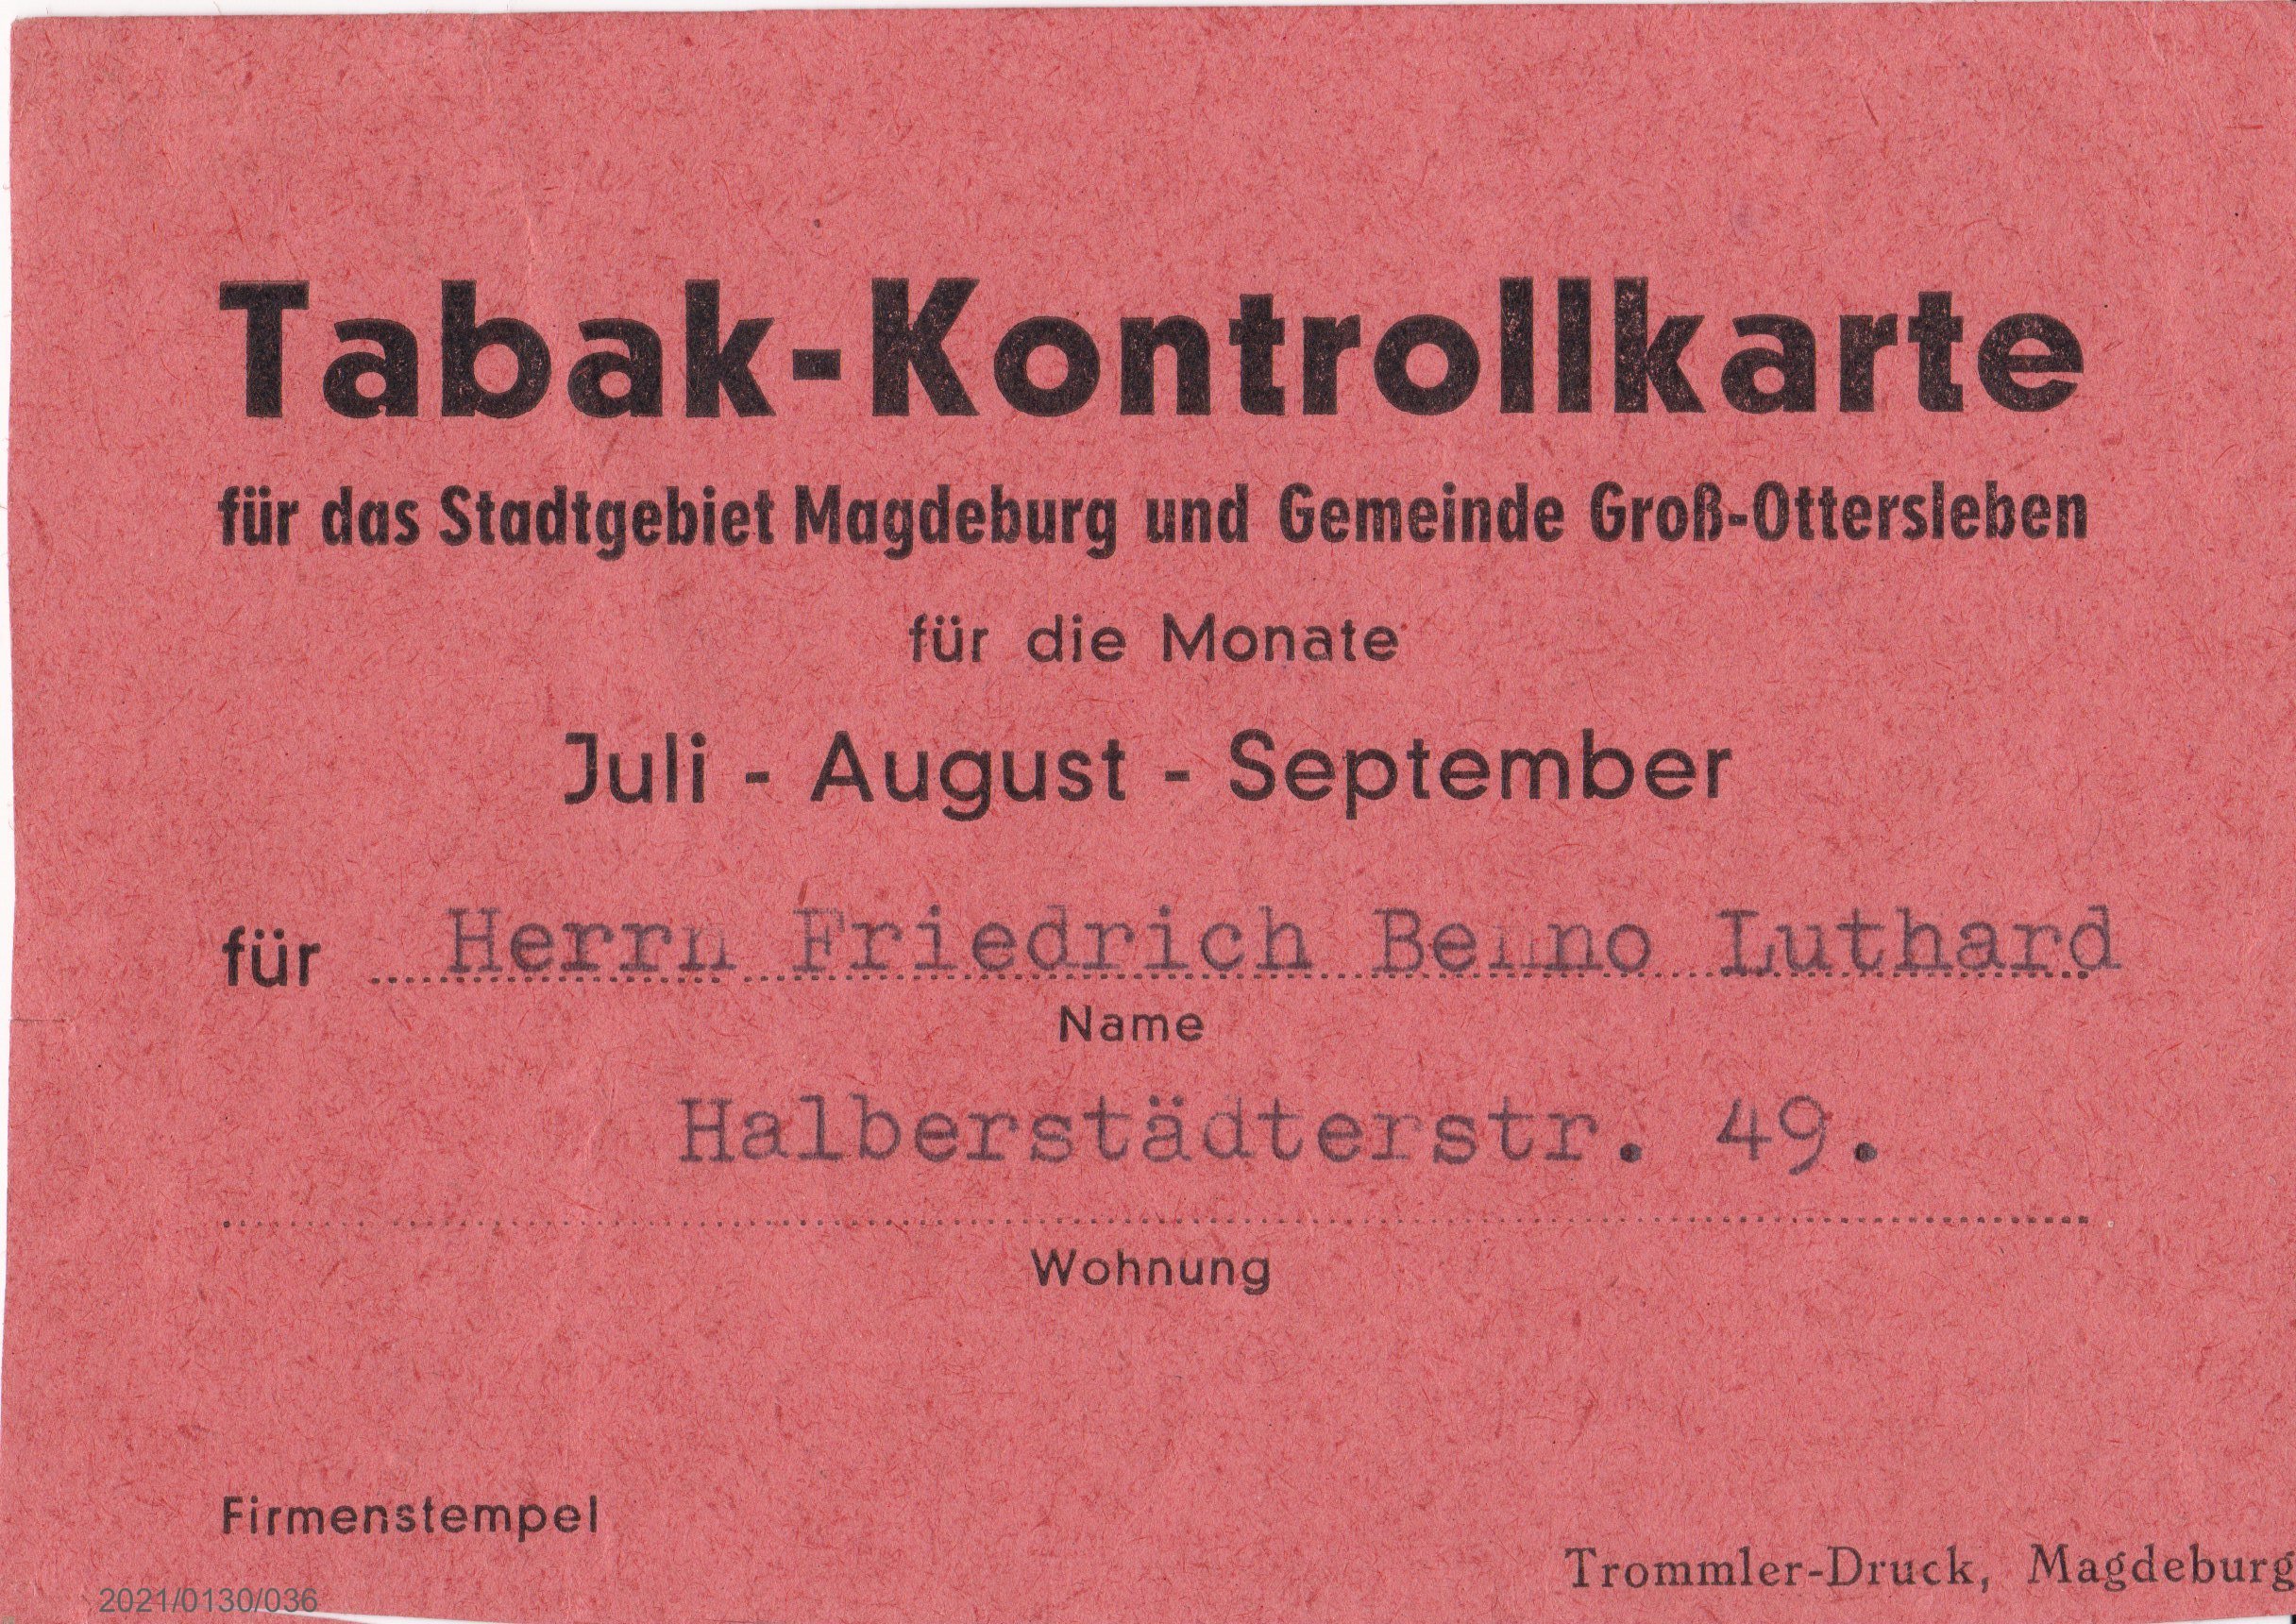 Tabak-Kontrollkarte für das Stadtgebiet Magdeburg und Gemeinde Groß-Ottersleben (Museumsgesellschaft Bad Dürkheim e. V. CC BY-NC-SA)